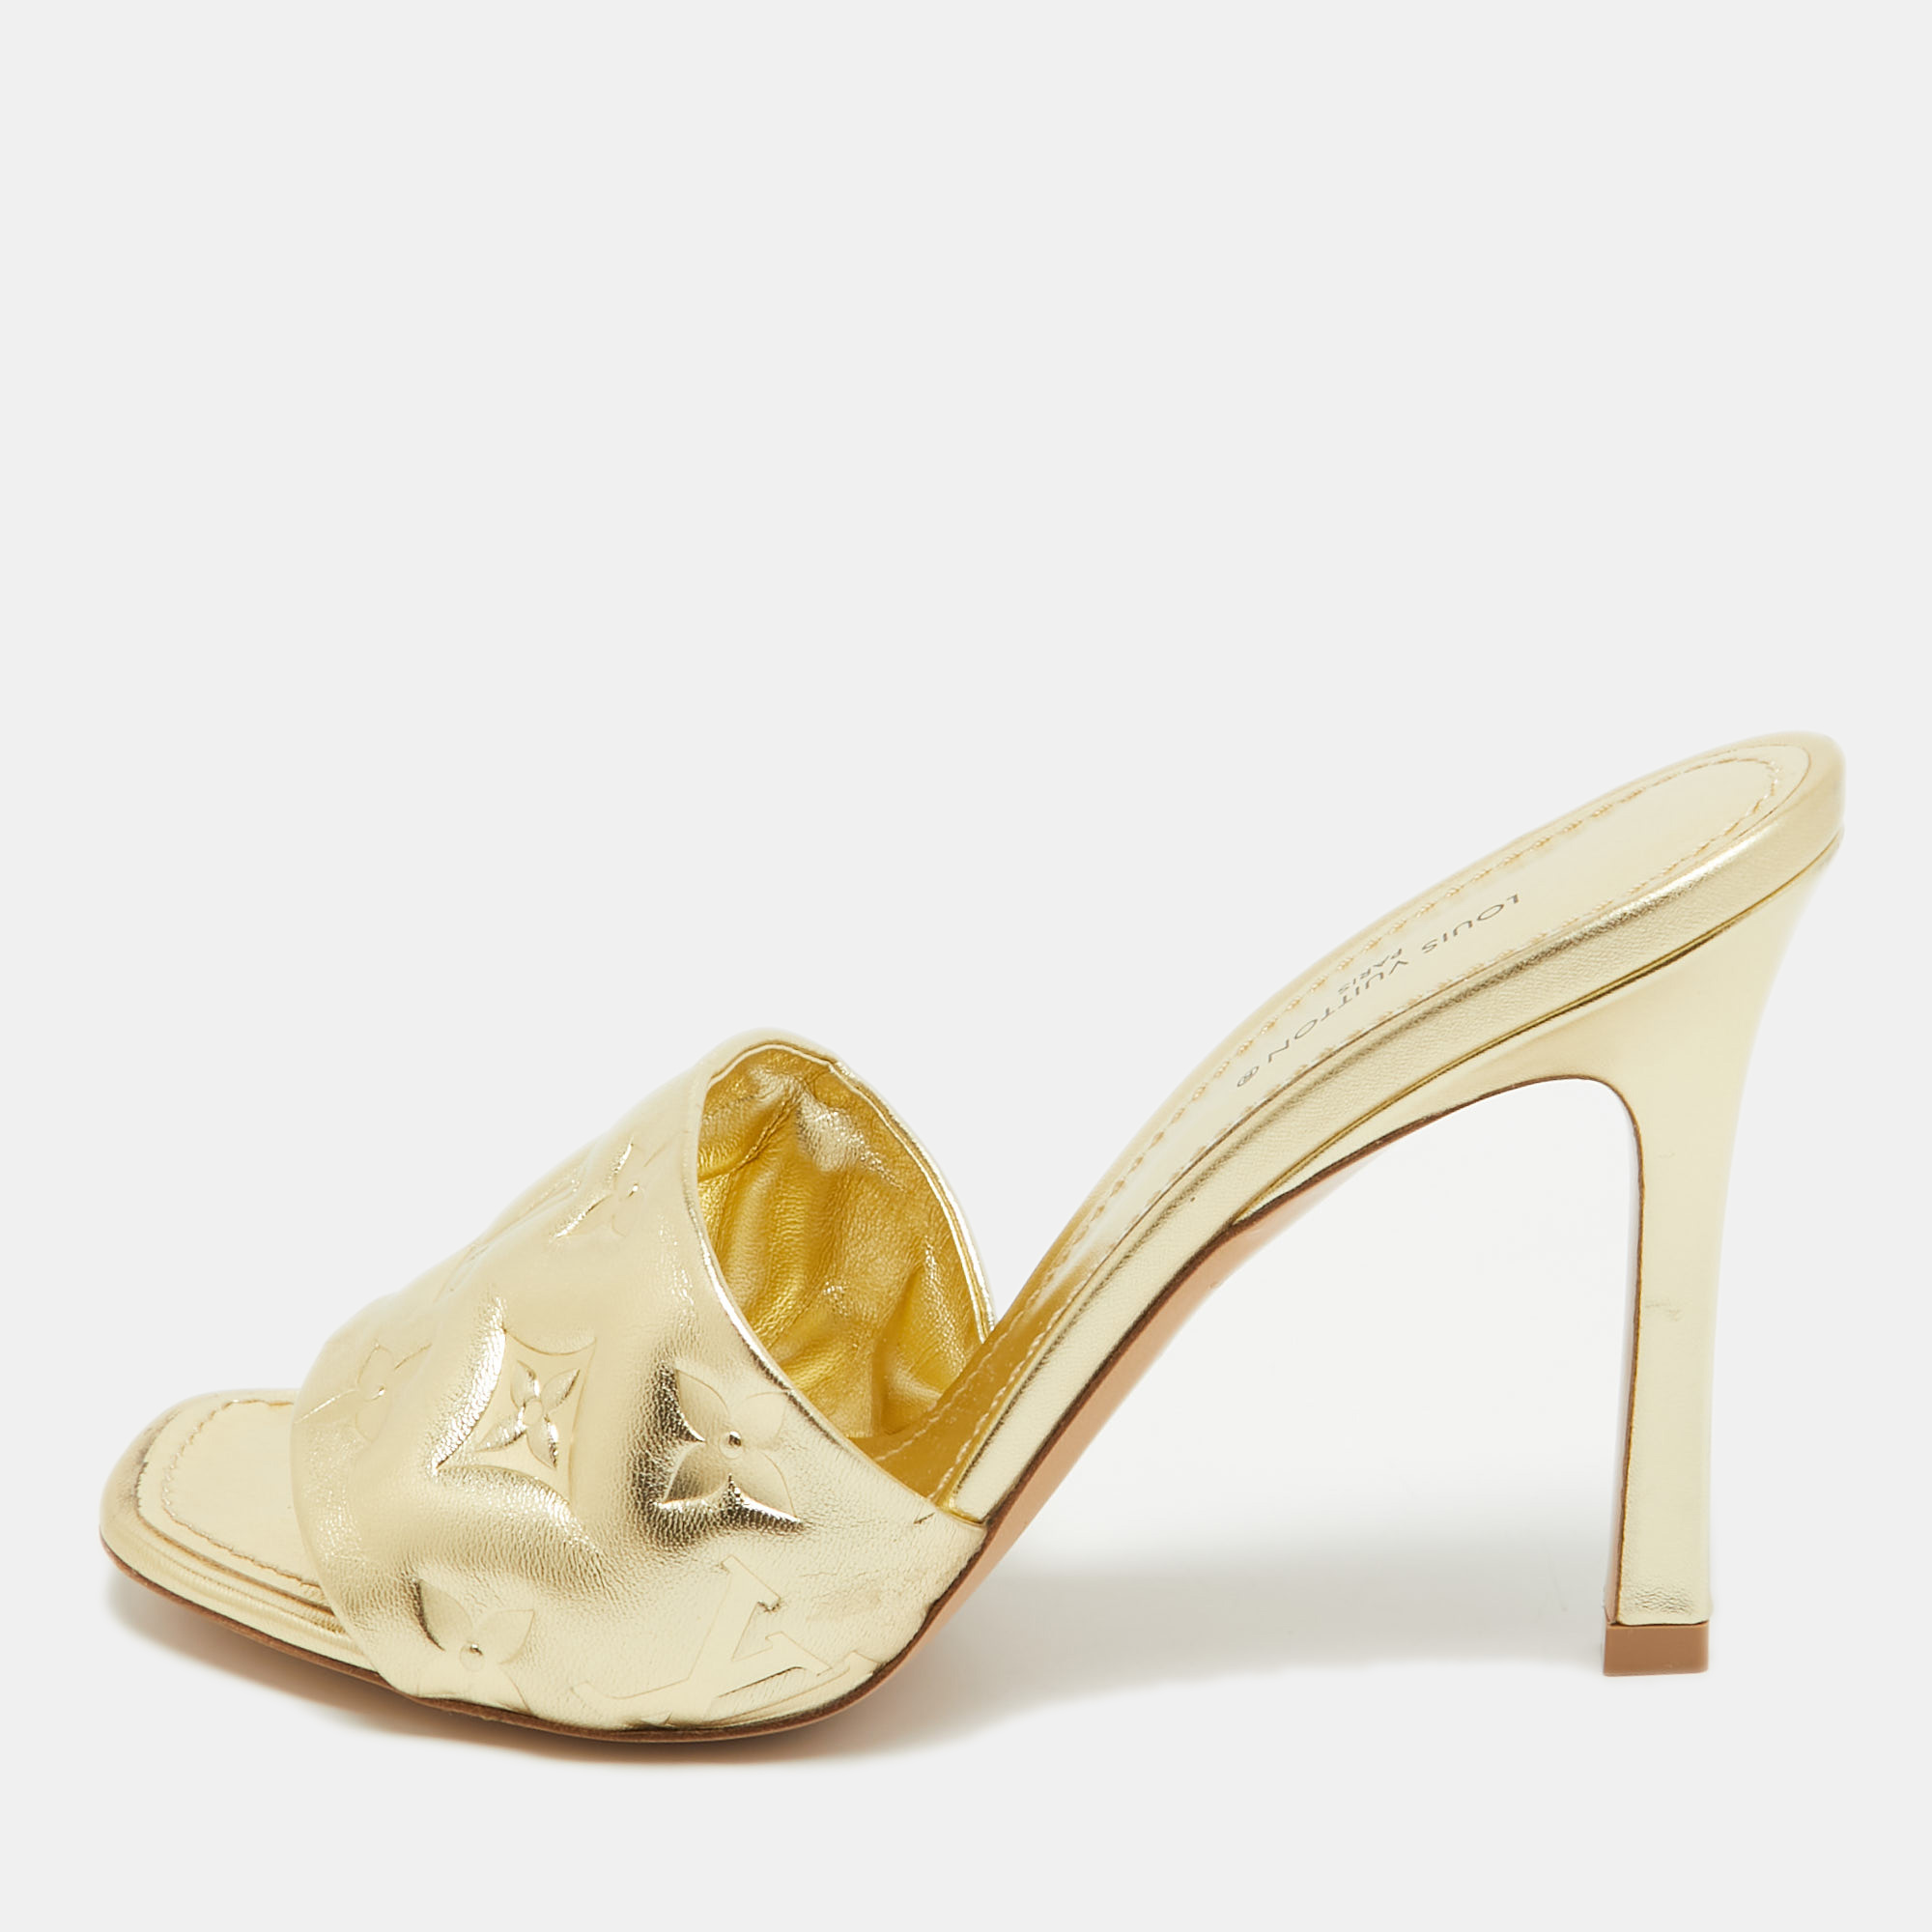 Louis vuitton gold monogram embossed leather revival slide sandals size 37